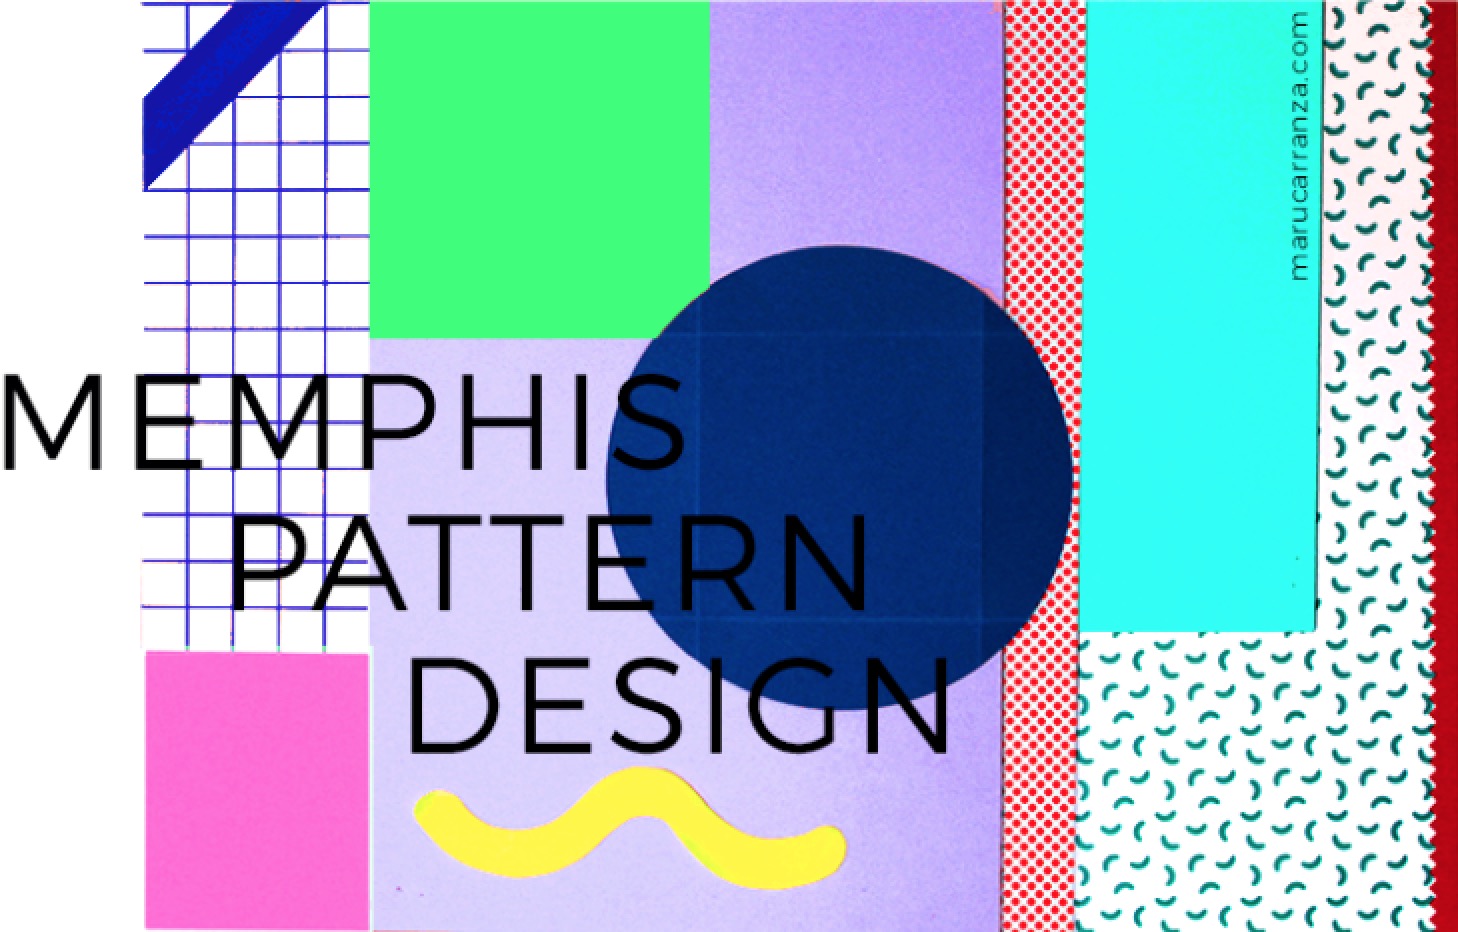 memphis-design-pattern-milano-berlin-geometric-design-collage-cardboard-futuristic-berlin-set-art-direction-workshop-marucarranza